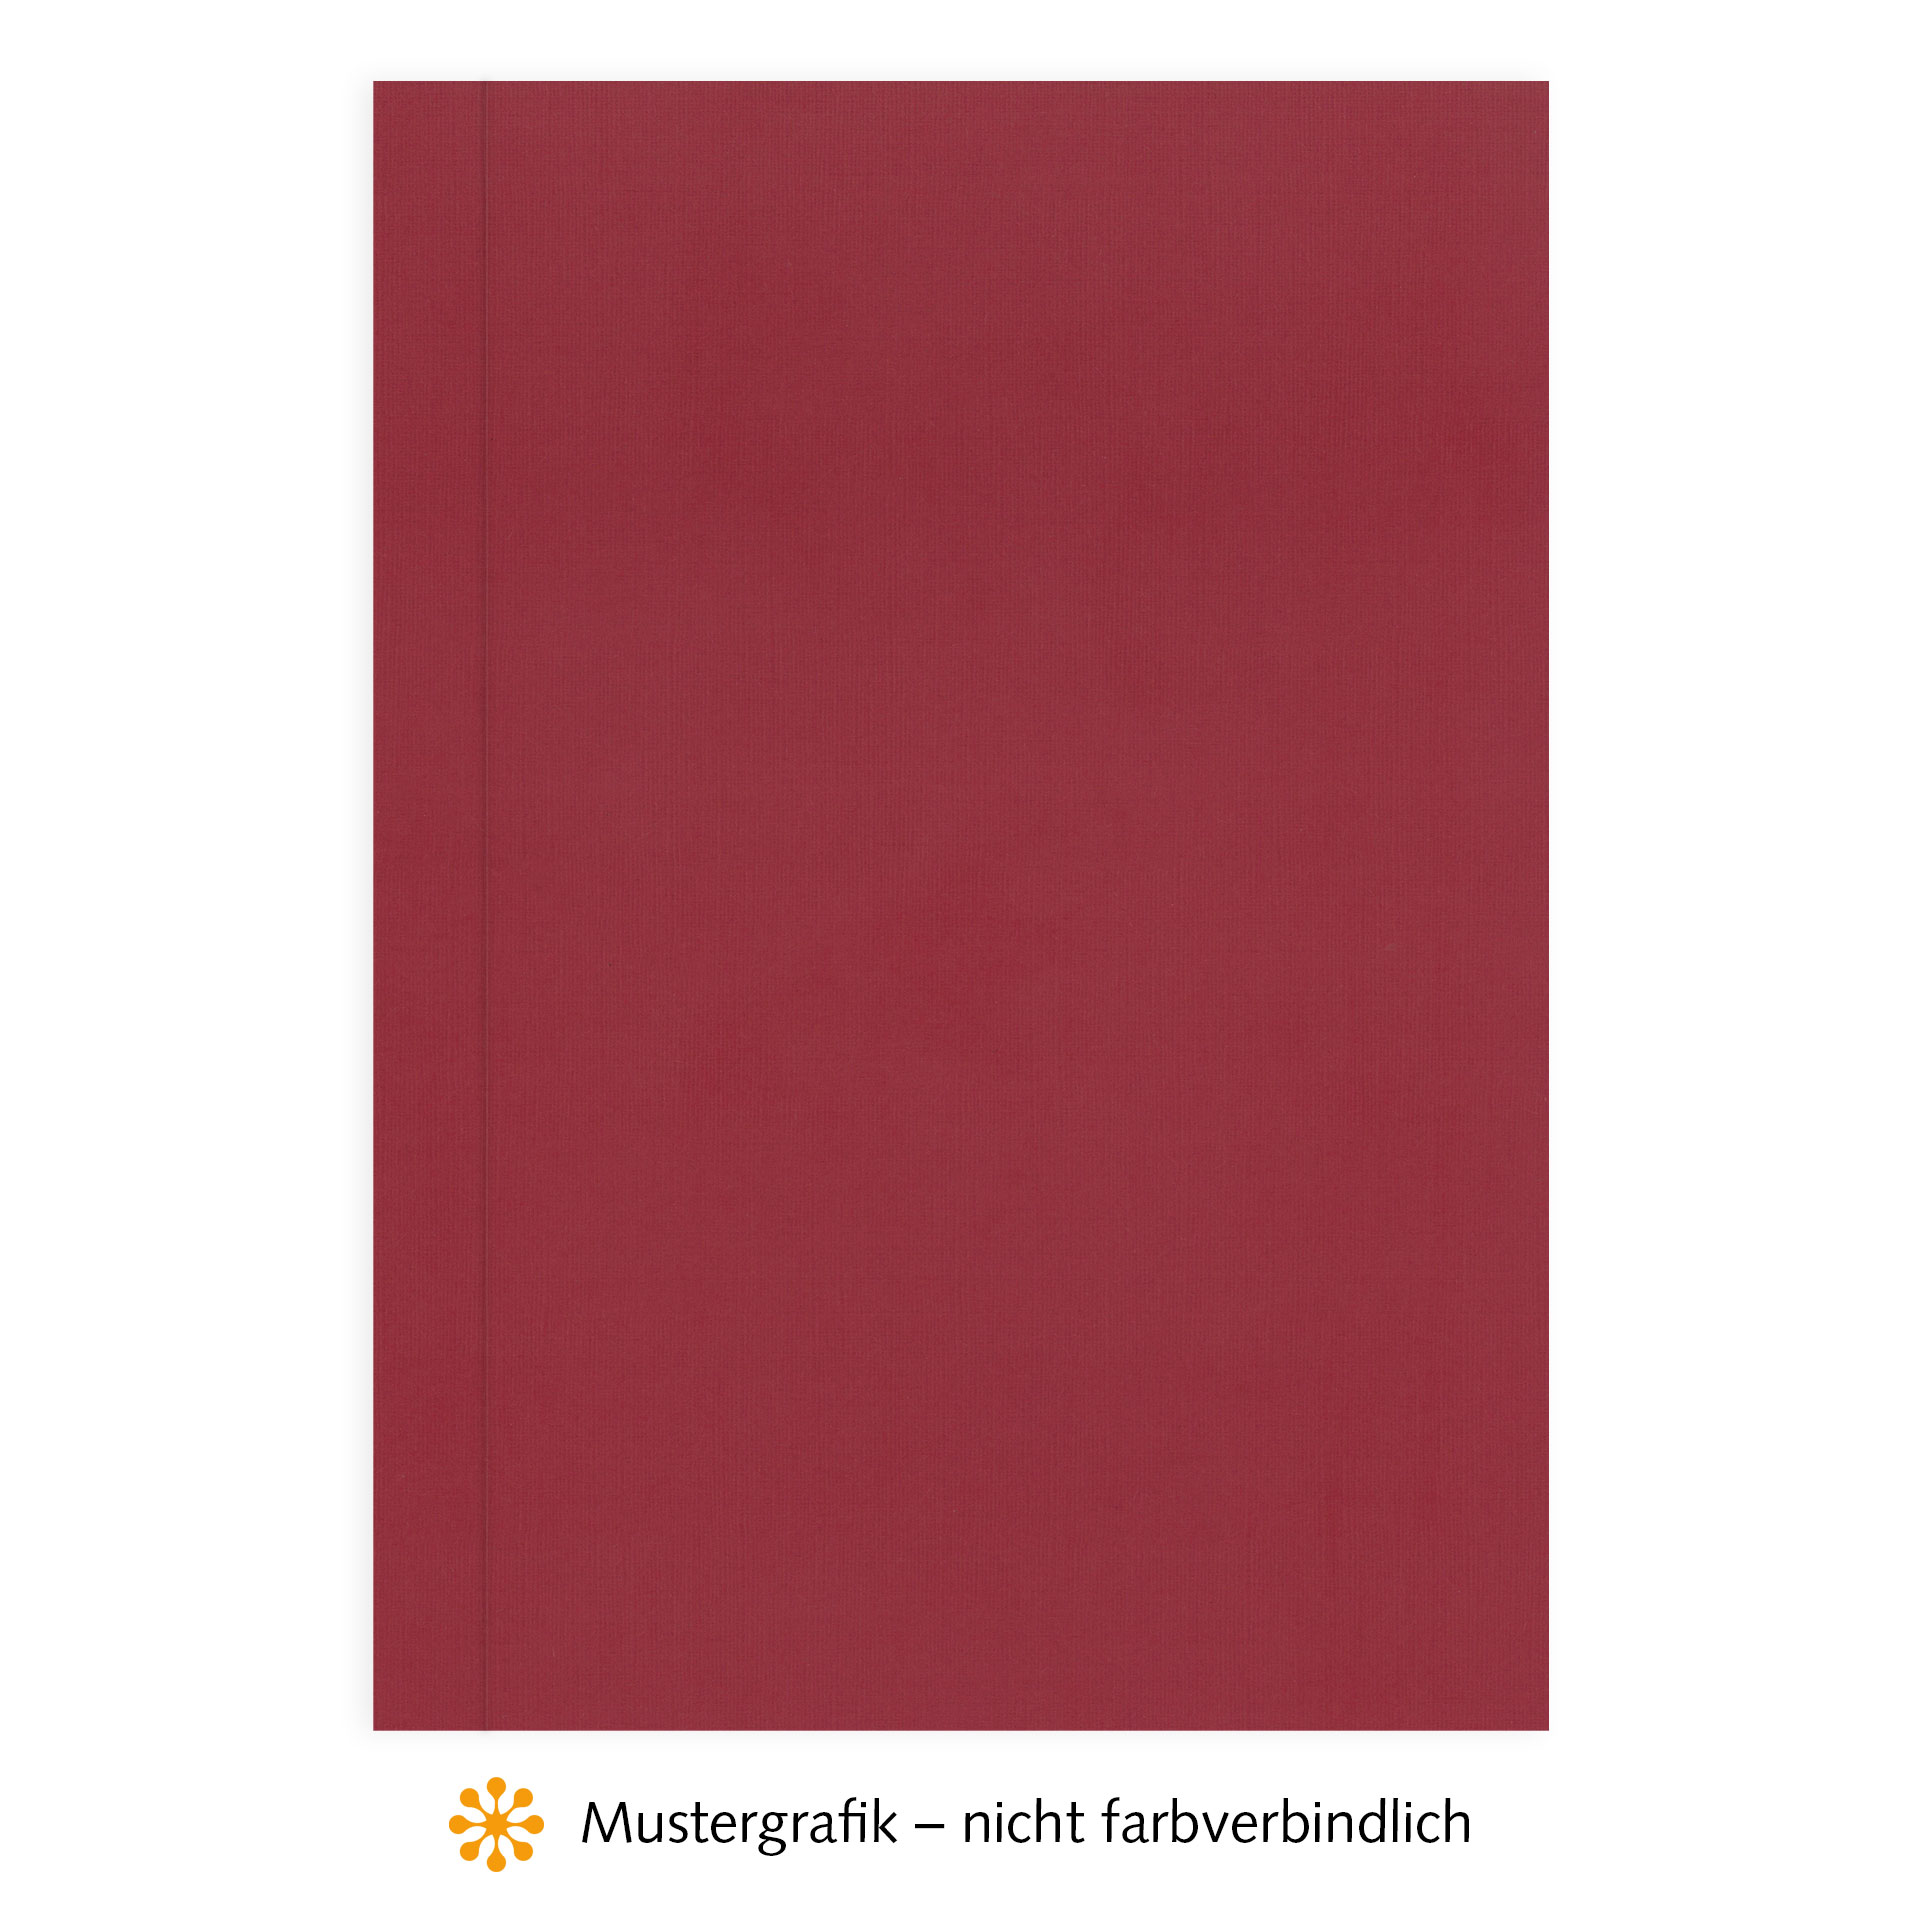 Ösenmappen DUO Cover, mit BEIDSEITIG Karton, Leinen, Rot, 7 mm, 61 bis 70 Blatt